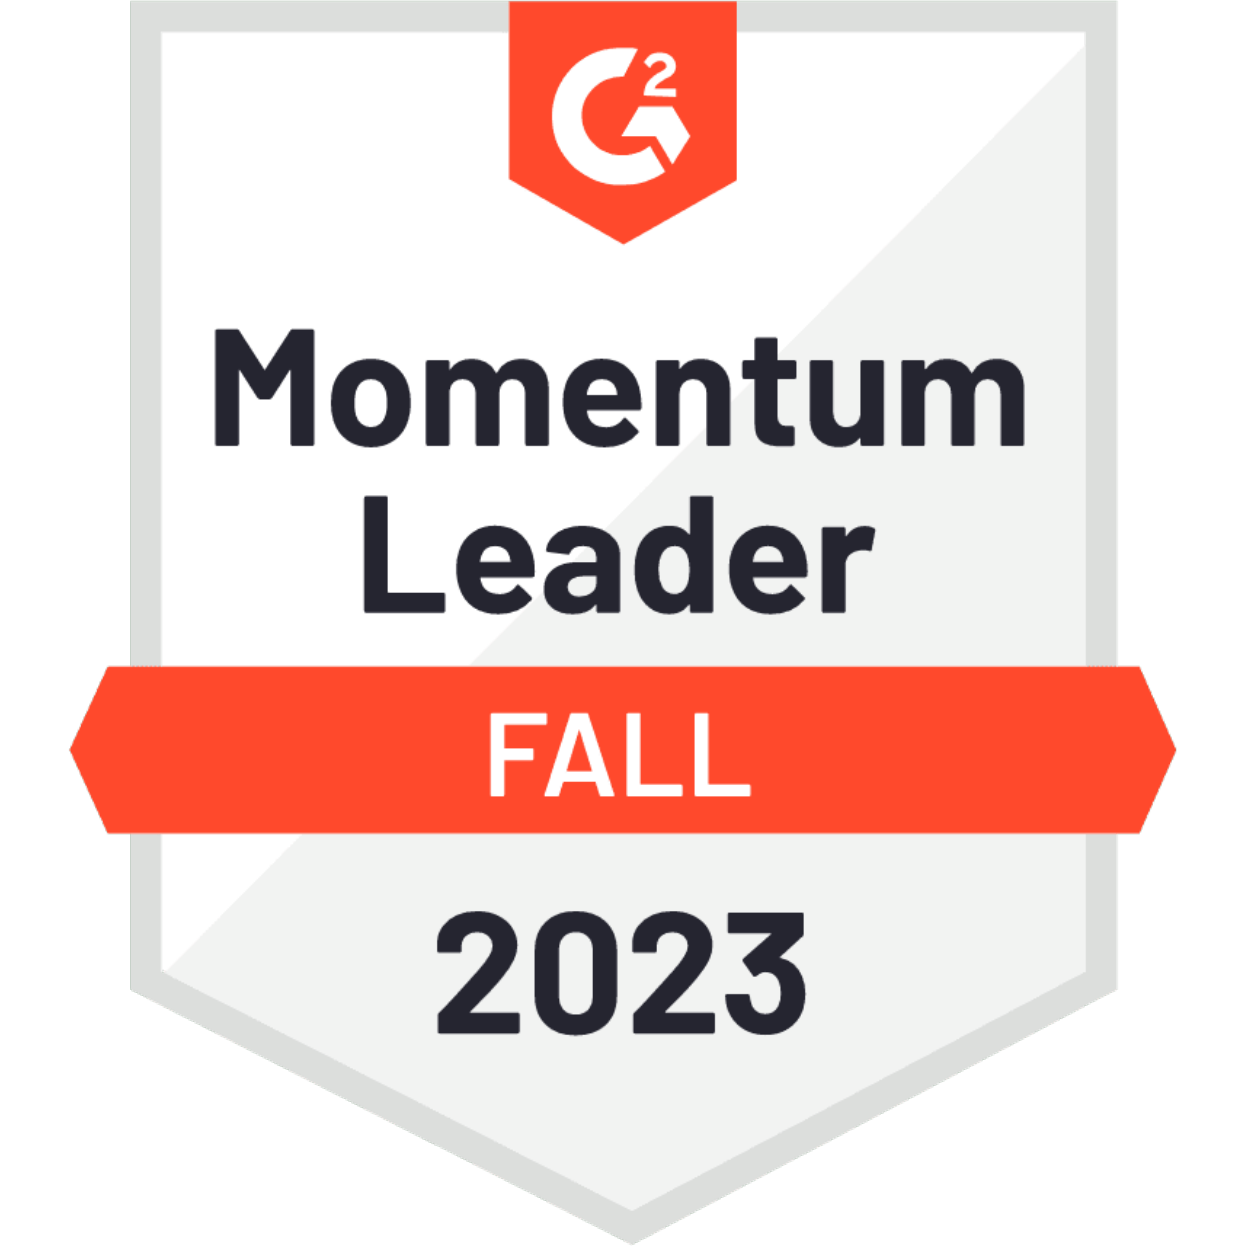 G2 Badge: Momentum Leader Fall 2023